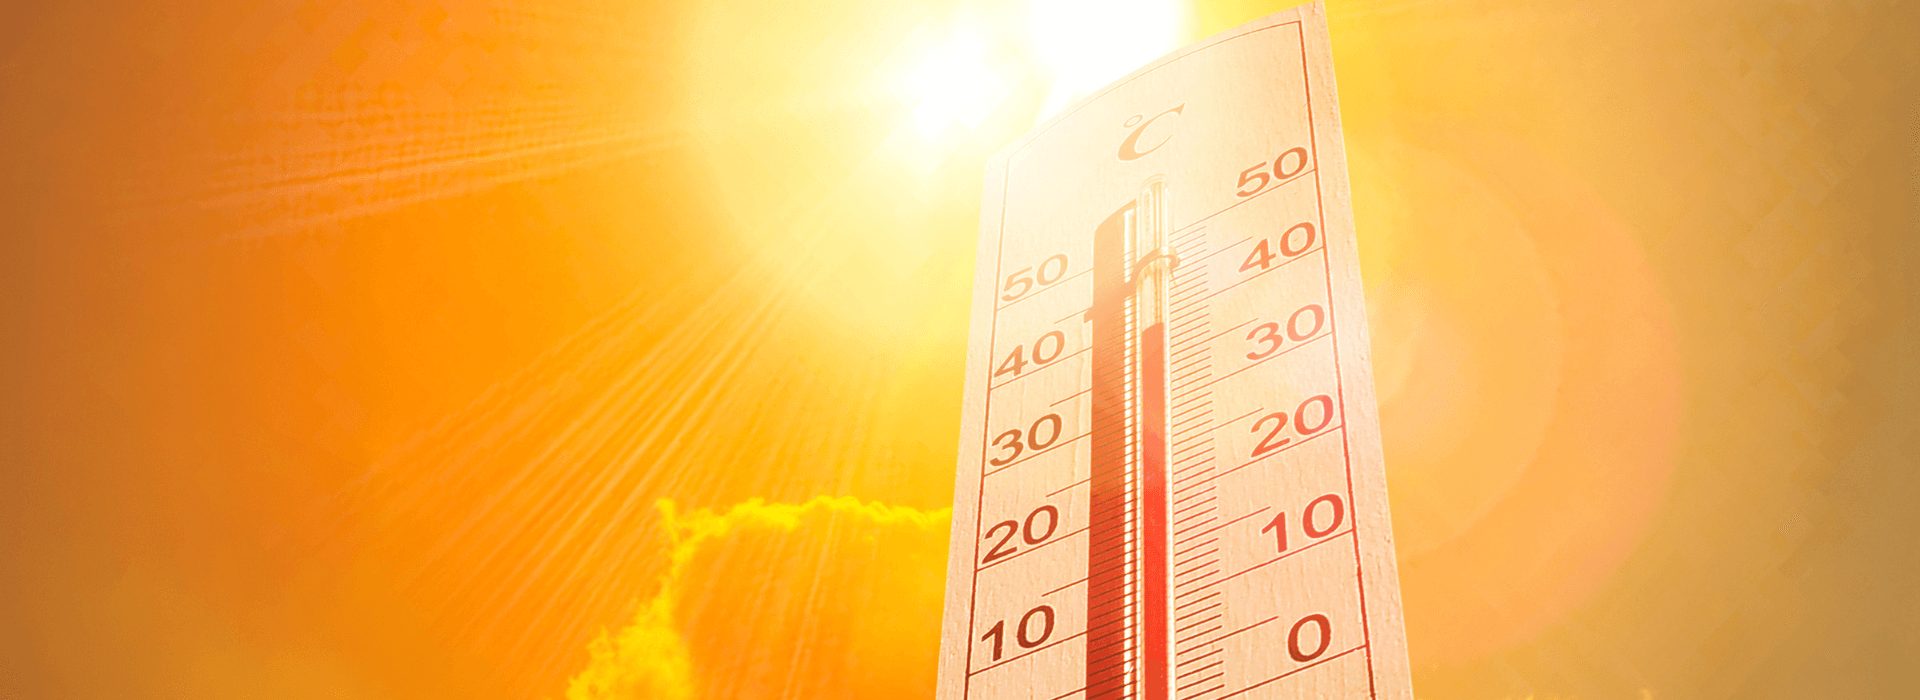 Chakra Balancing and Perimenopause | Rising temp thermometer with hot sun in background | Shine Body & Bath Chakra Soap | Blog